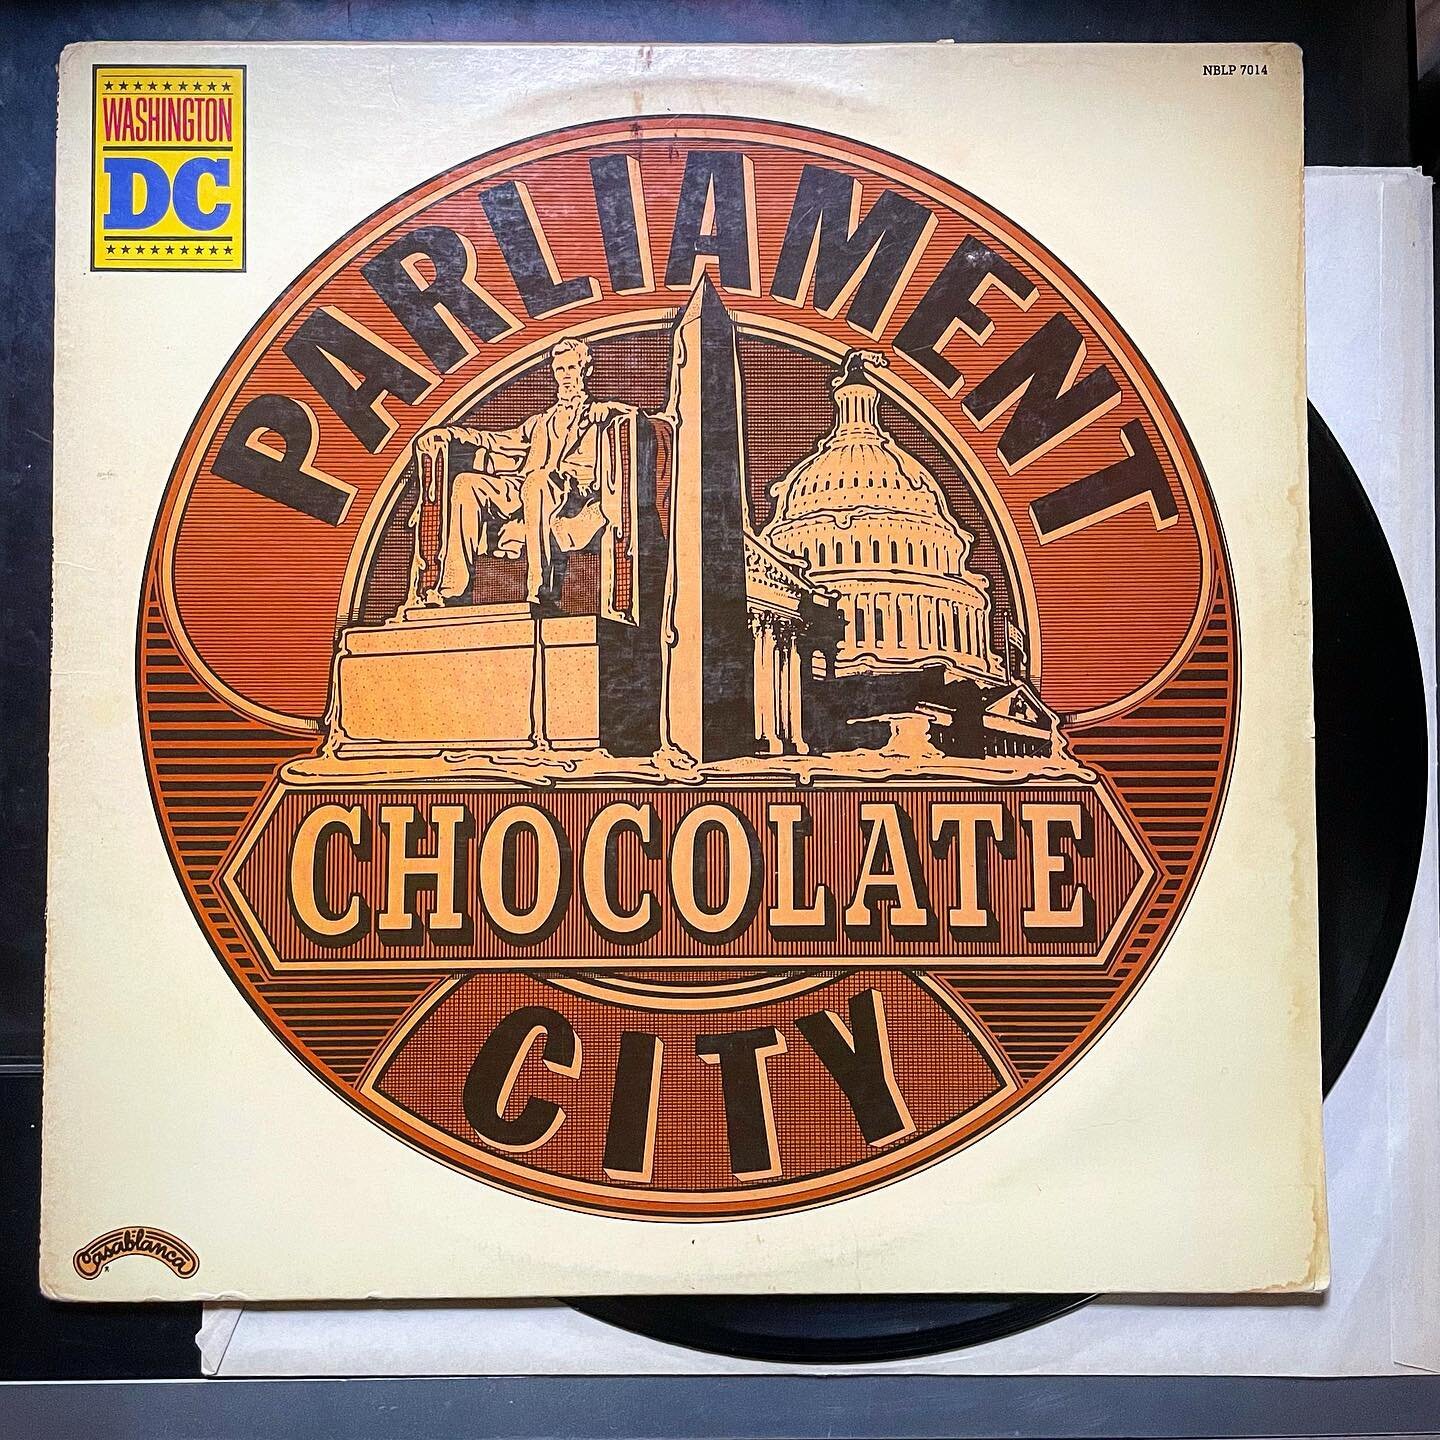 Parliament - Chocolate City (1975) #Together is my #Jam 🎶 #Funk #Vinyl #GeorgeClinton #Parliament #Record #70s #Wax #ChocolateCity